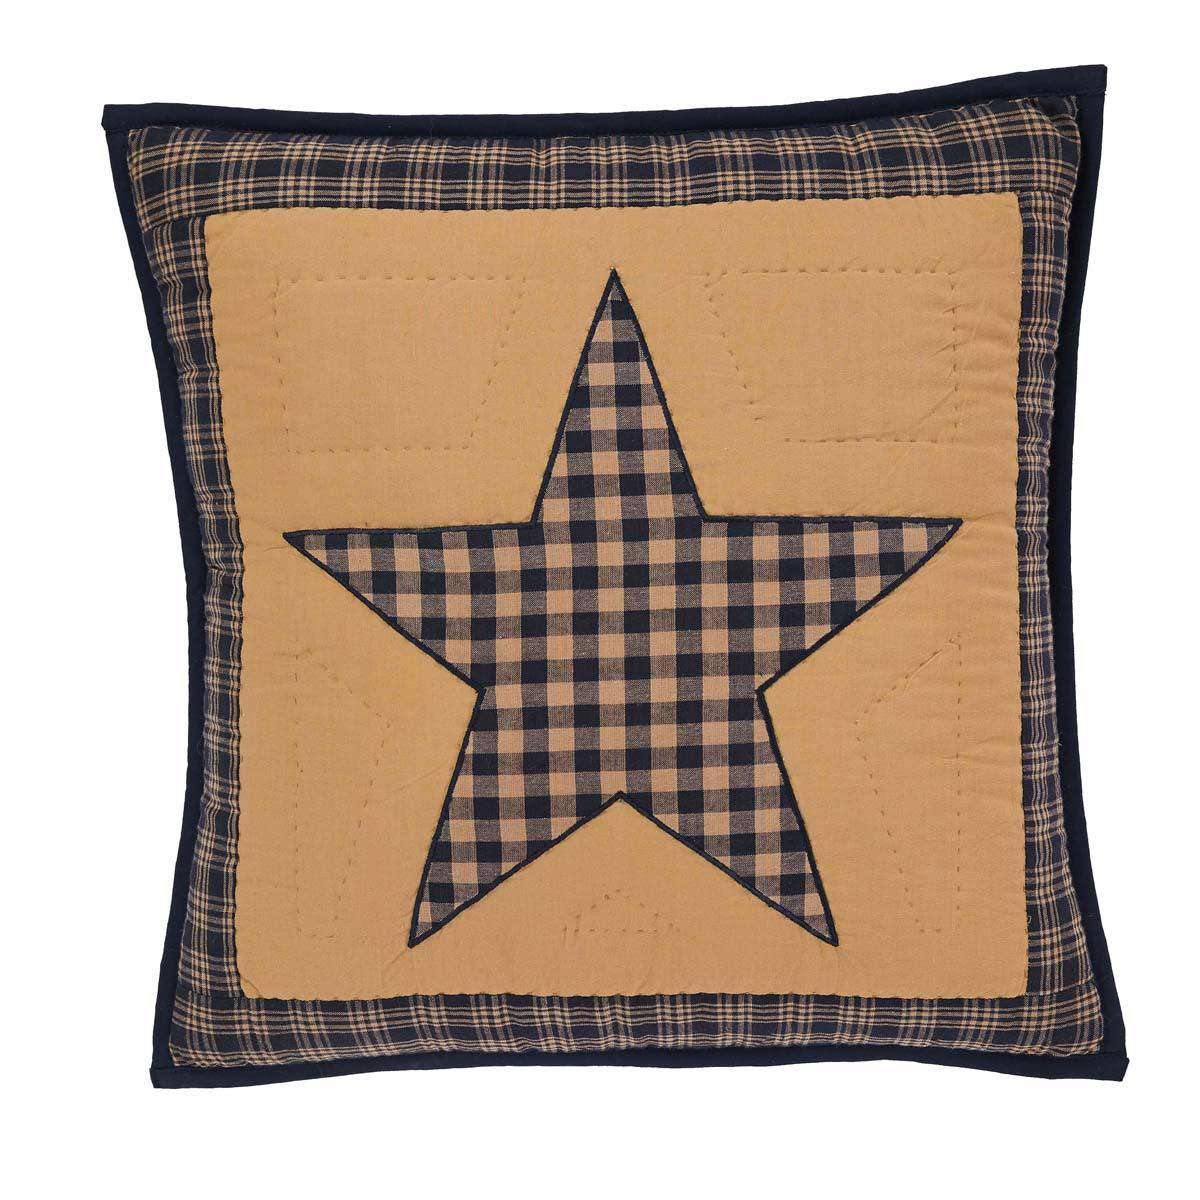 Teton Star Quilted Pillow 16x16 - The Fox Decor